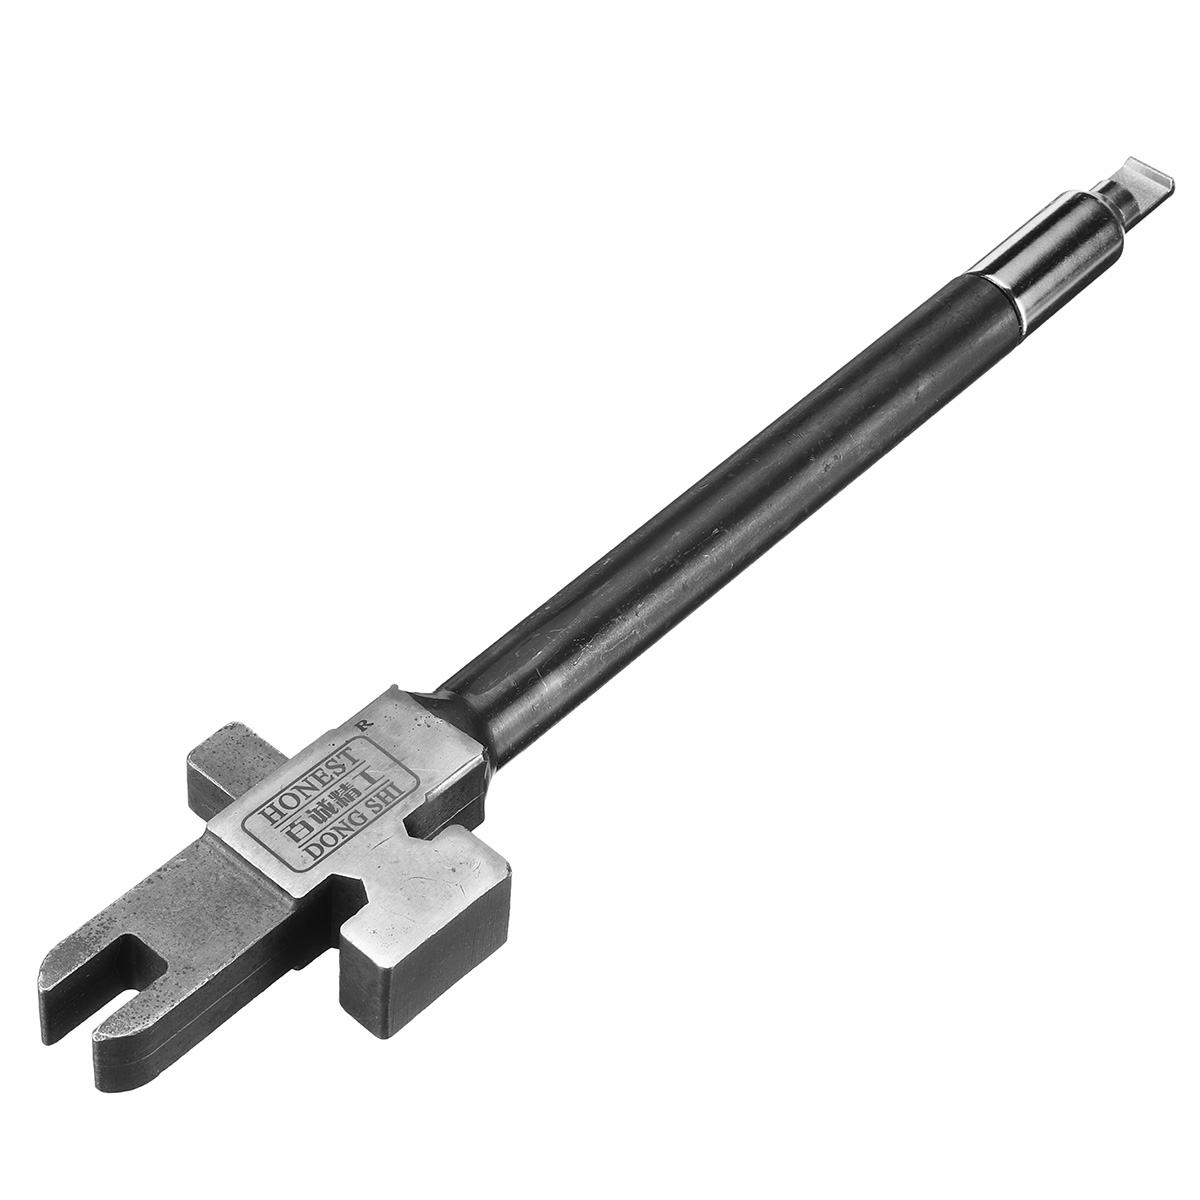 Locksmith-Supplies-Locksmith-Repair-Tools-Emergency-Lock-Cylinder-5-in-1-Twist-off-Consumables-1871446-4